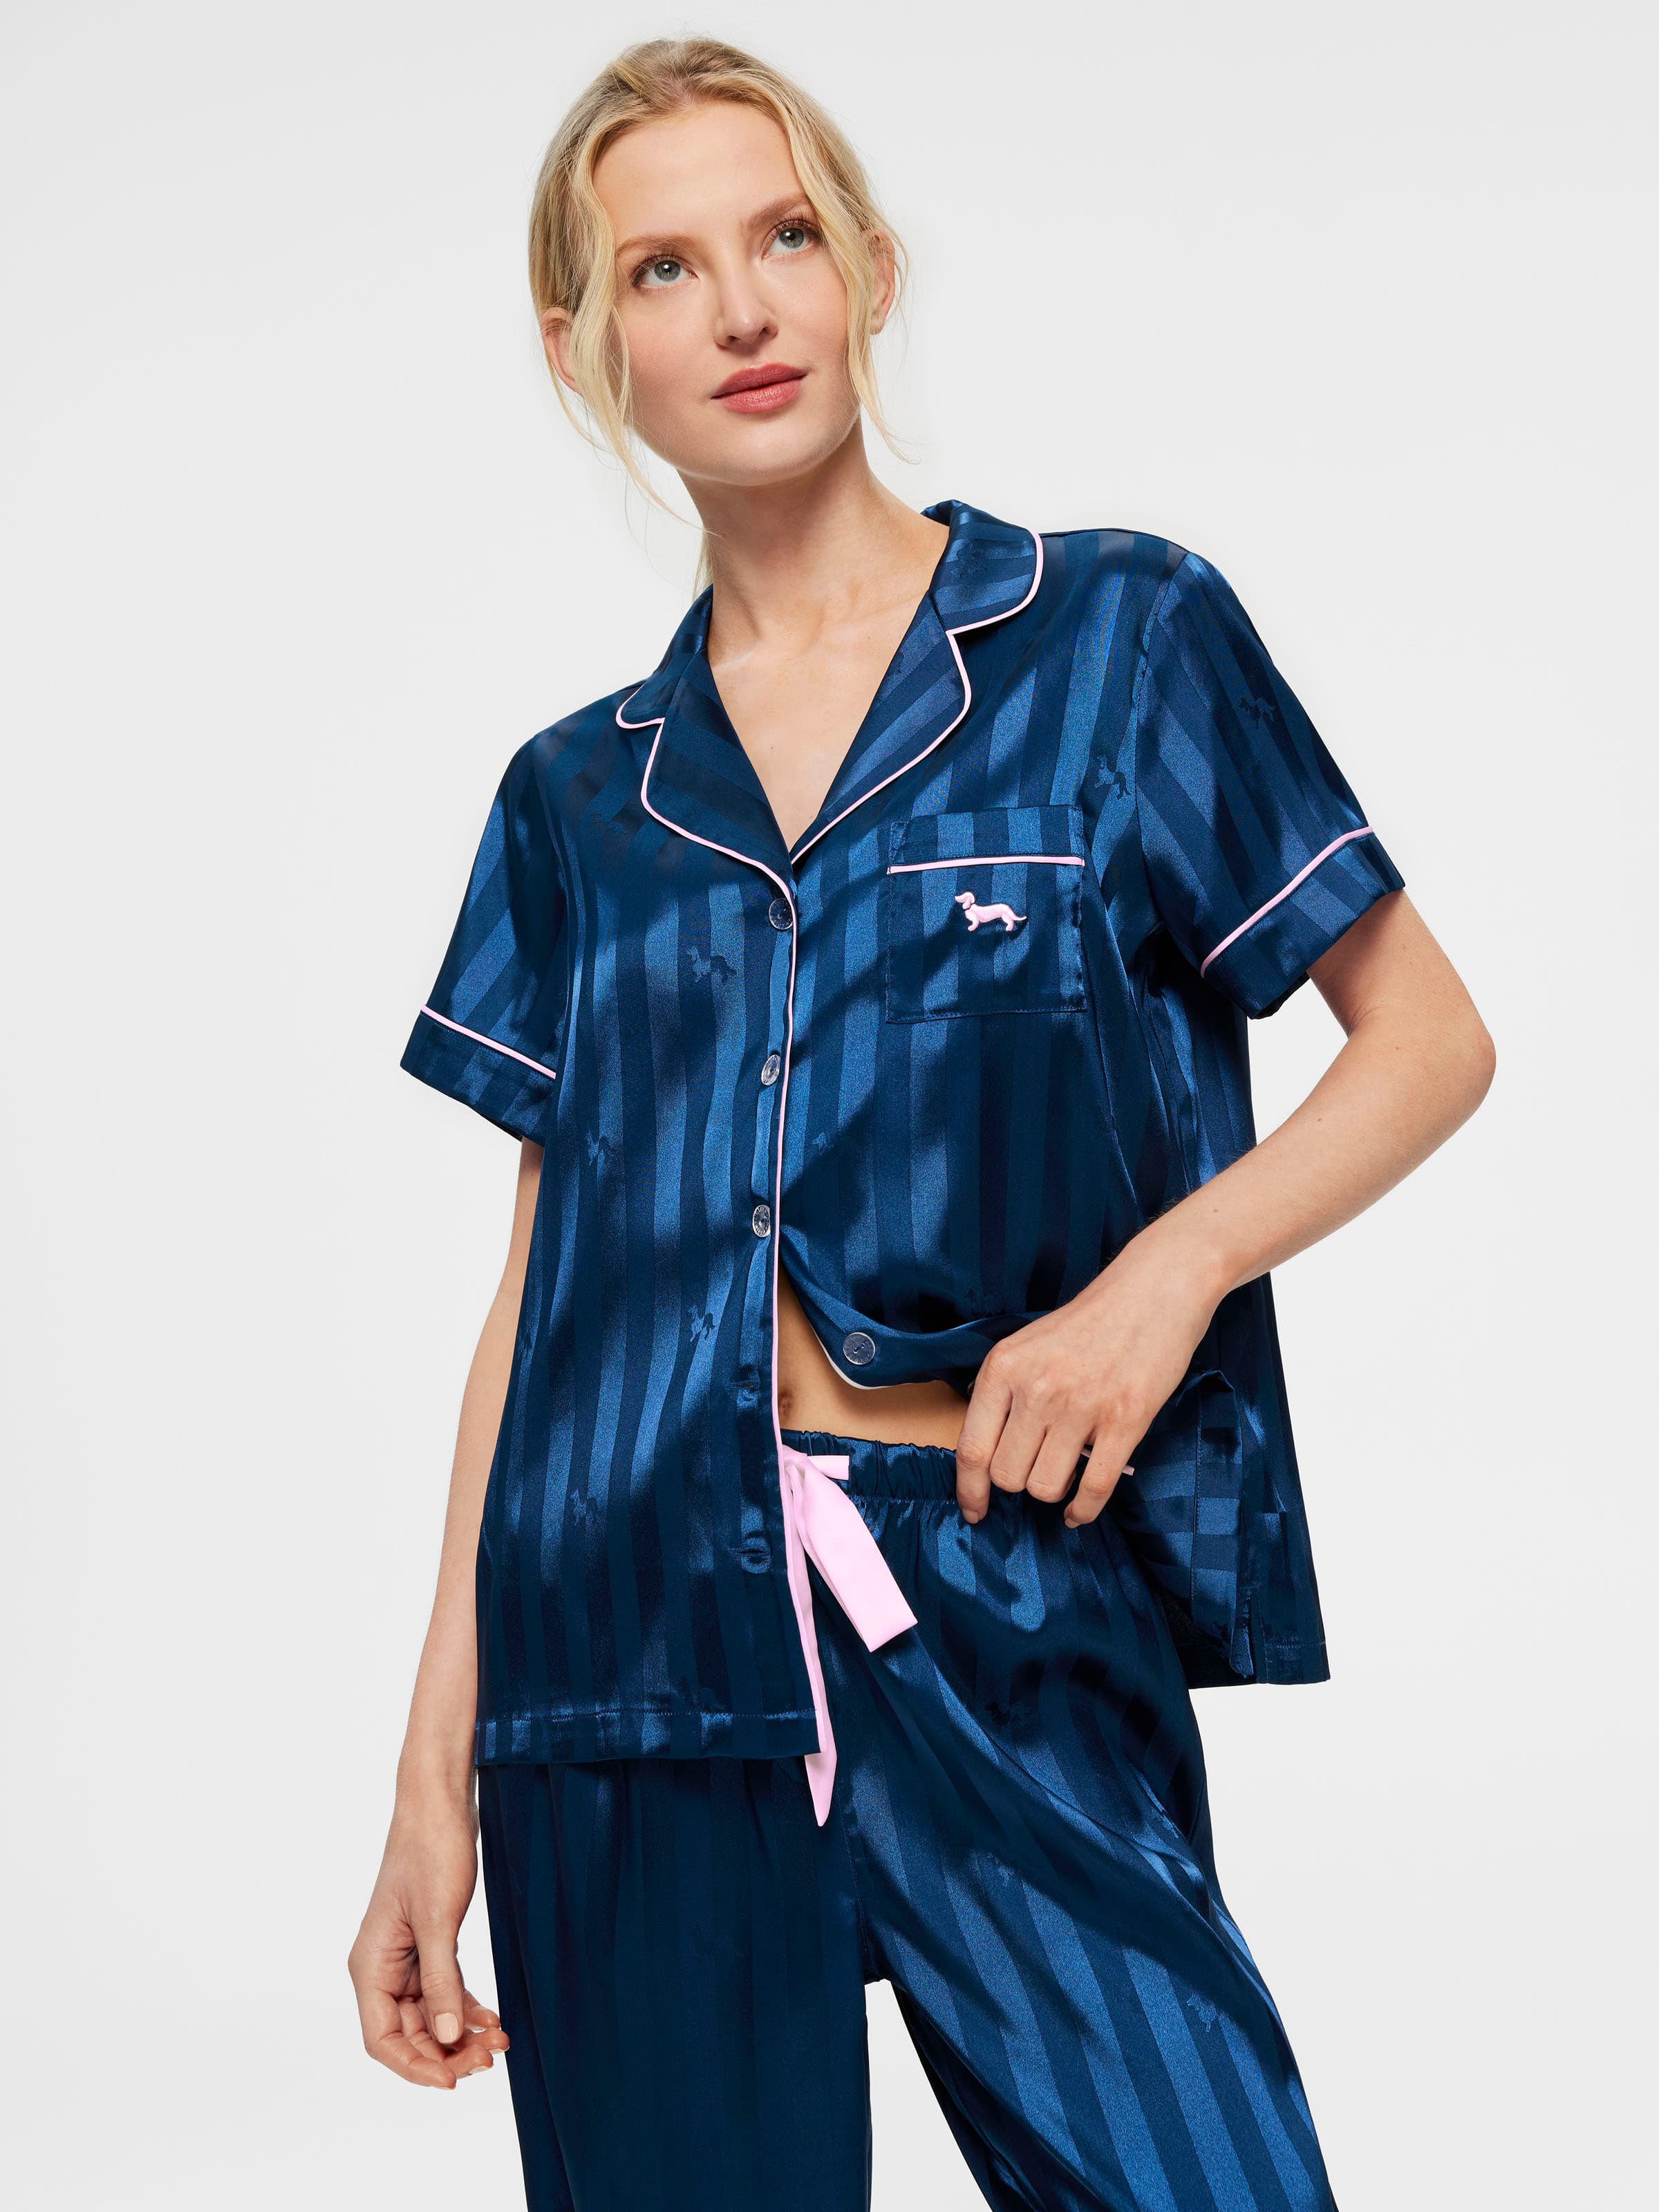 Women's Satin Pyjamas – Satin PJ Sets, Sleepwear & Nightwear